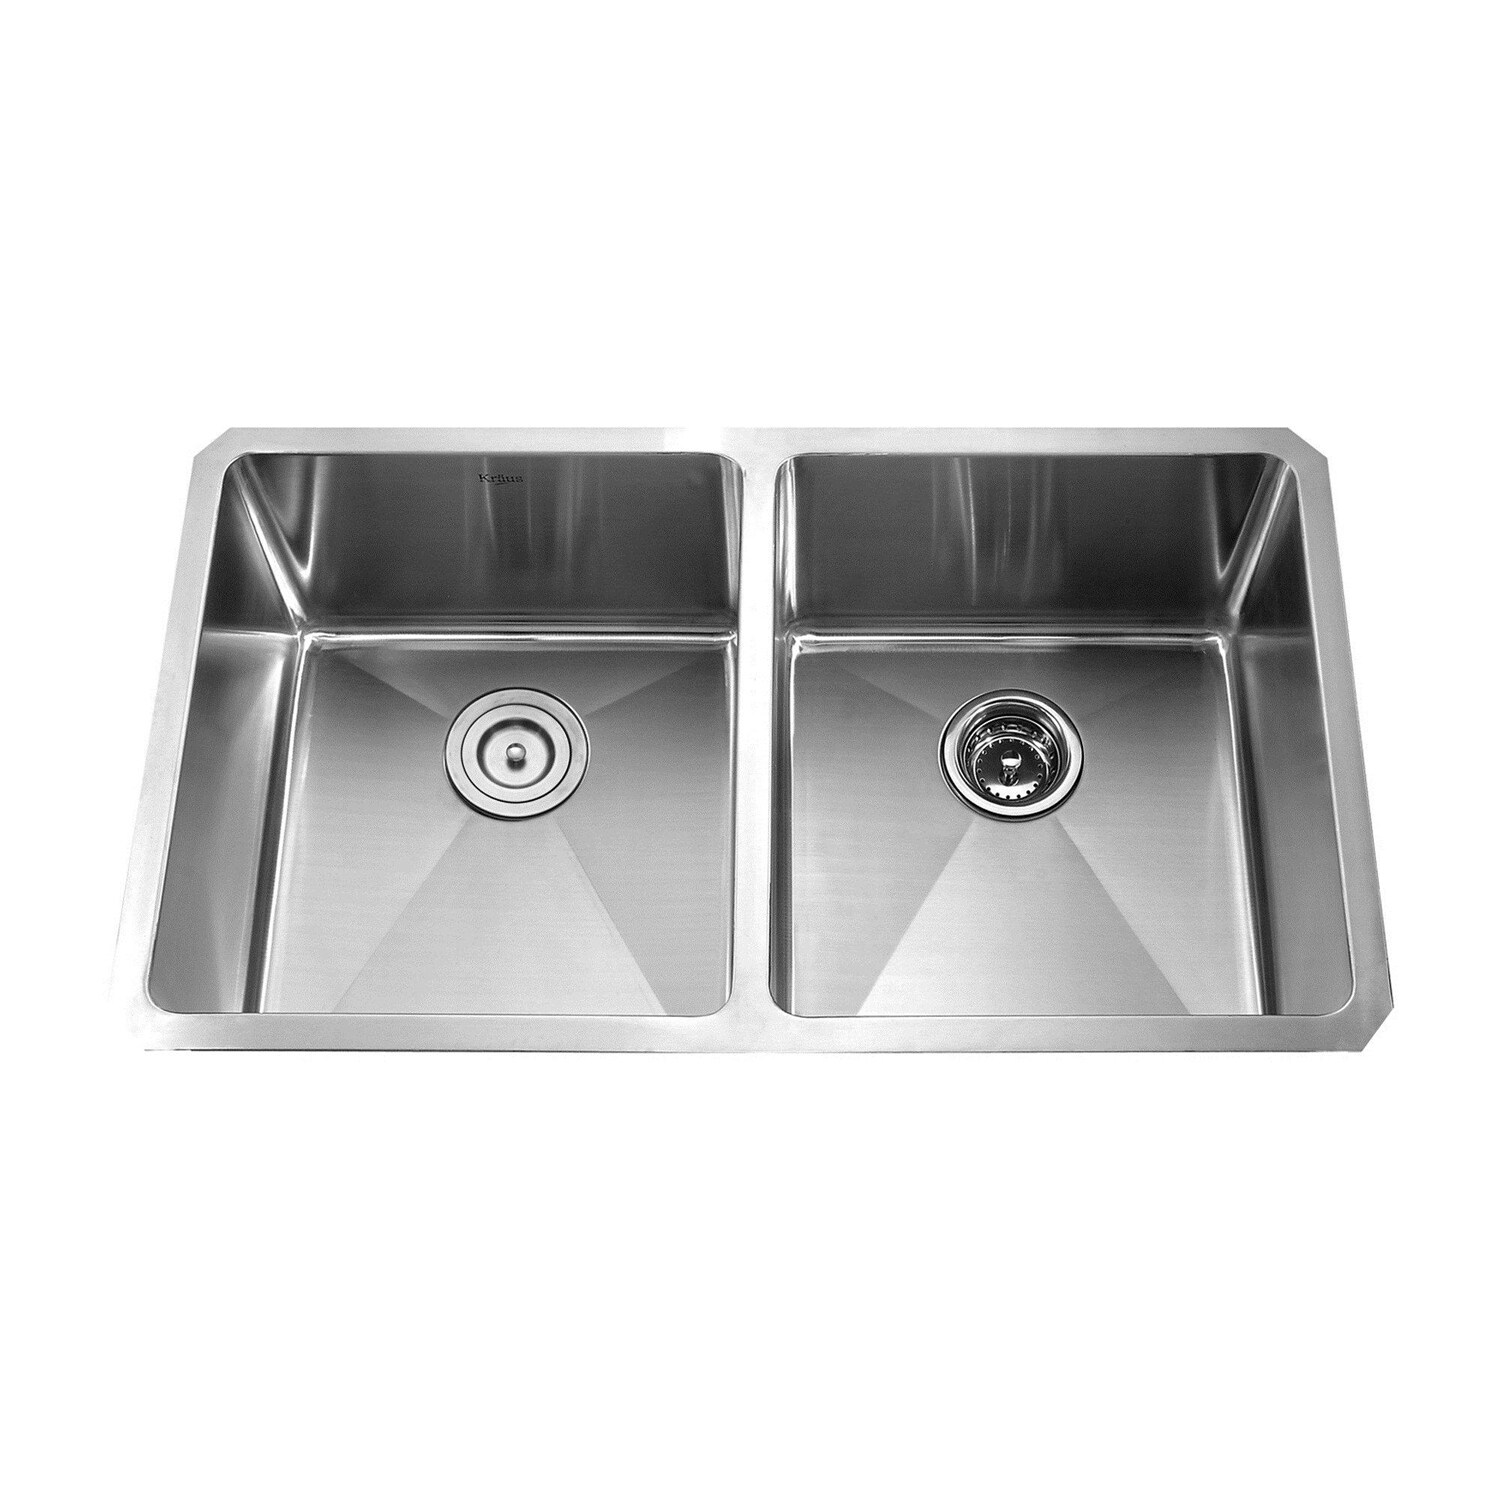 https://ak1.ostkcdn.com/images/products/4389944/Kraus-Kitchen-Combo-Set-Stainless-Steel-33-inch-Undermount-Sink-Faucet-49d63faf-69ba-4bce-8592-6918704d69e3.jpg